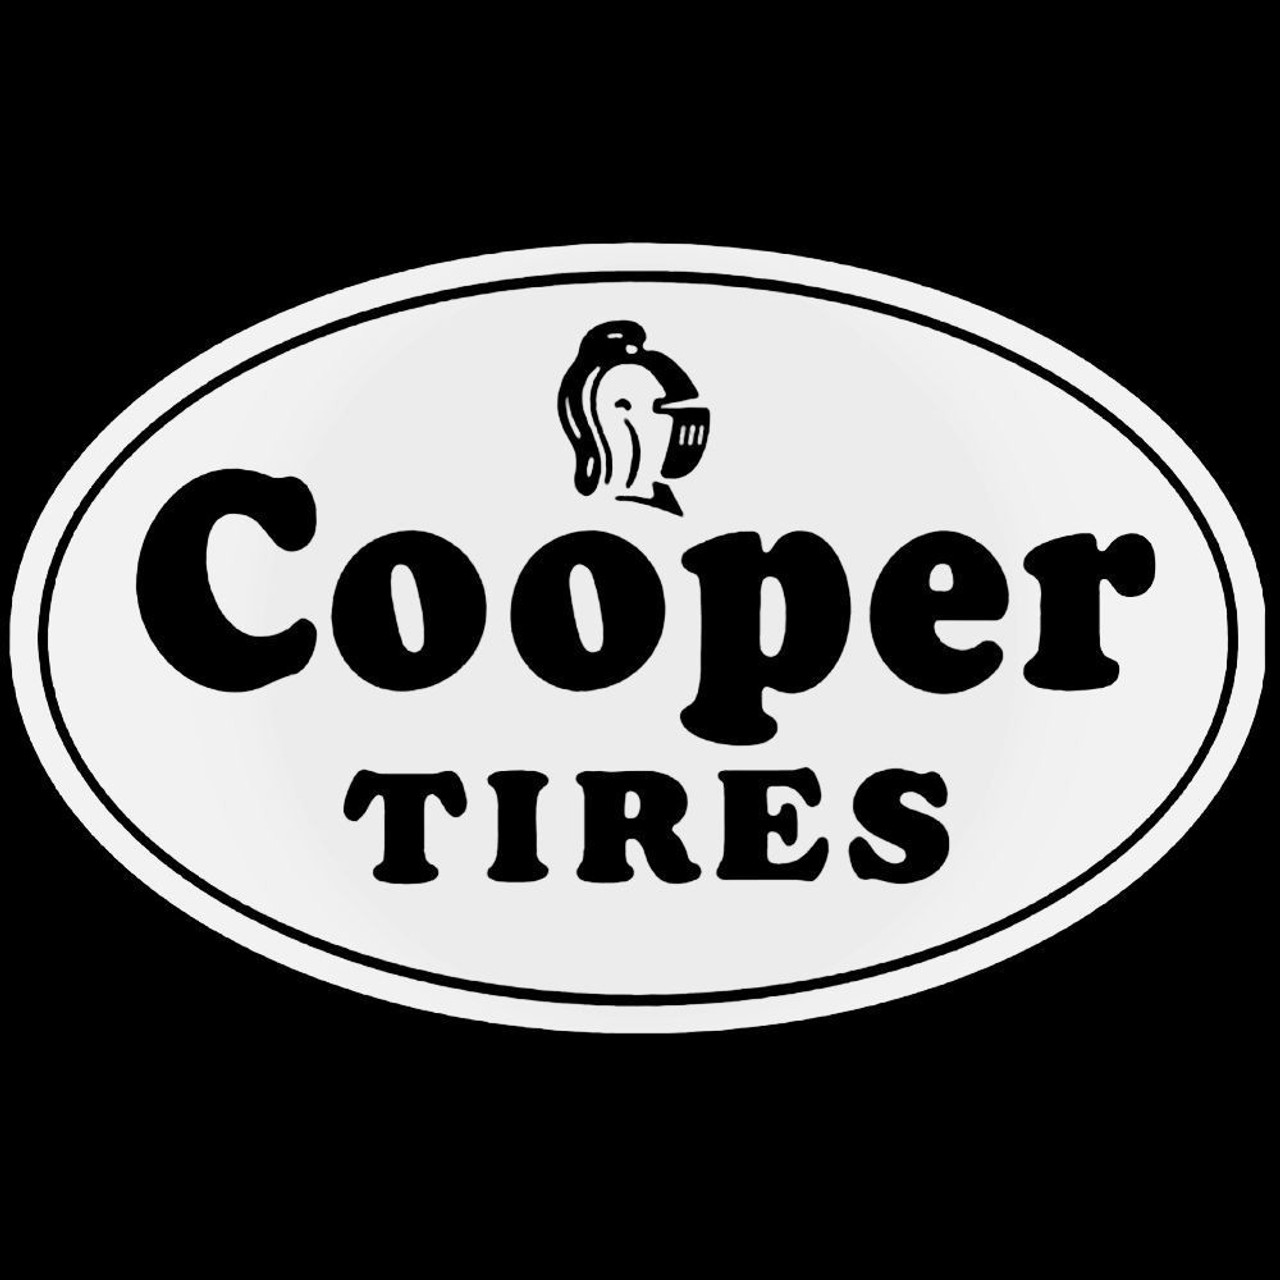 Cooper Tires Vinyl Decal Sticker